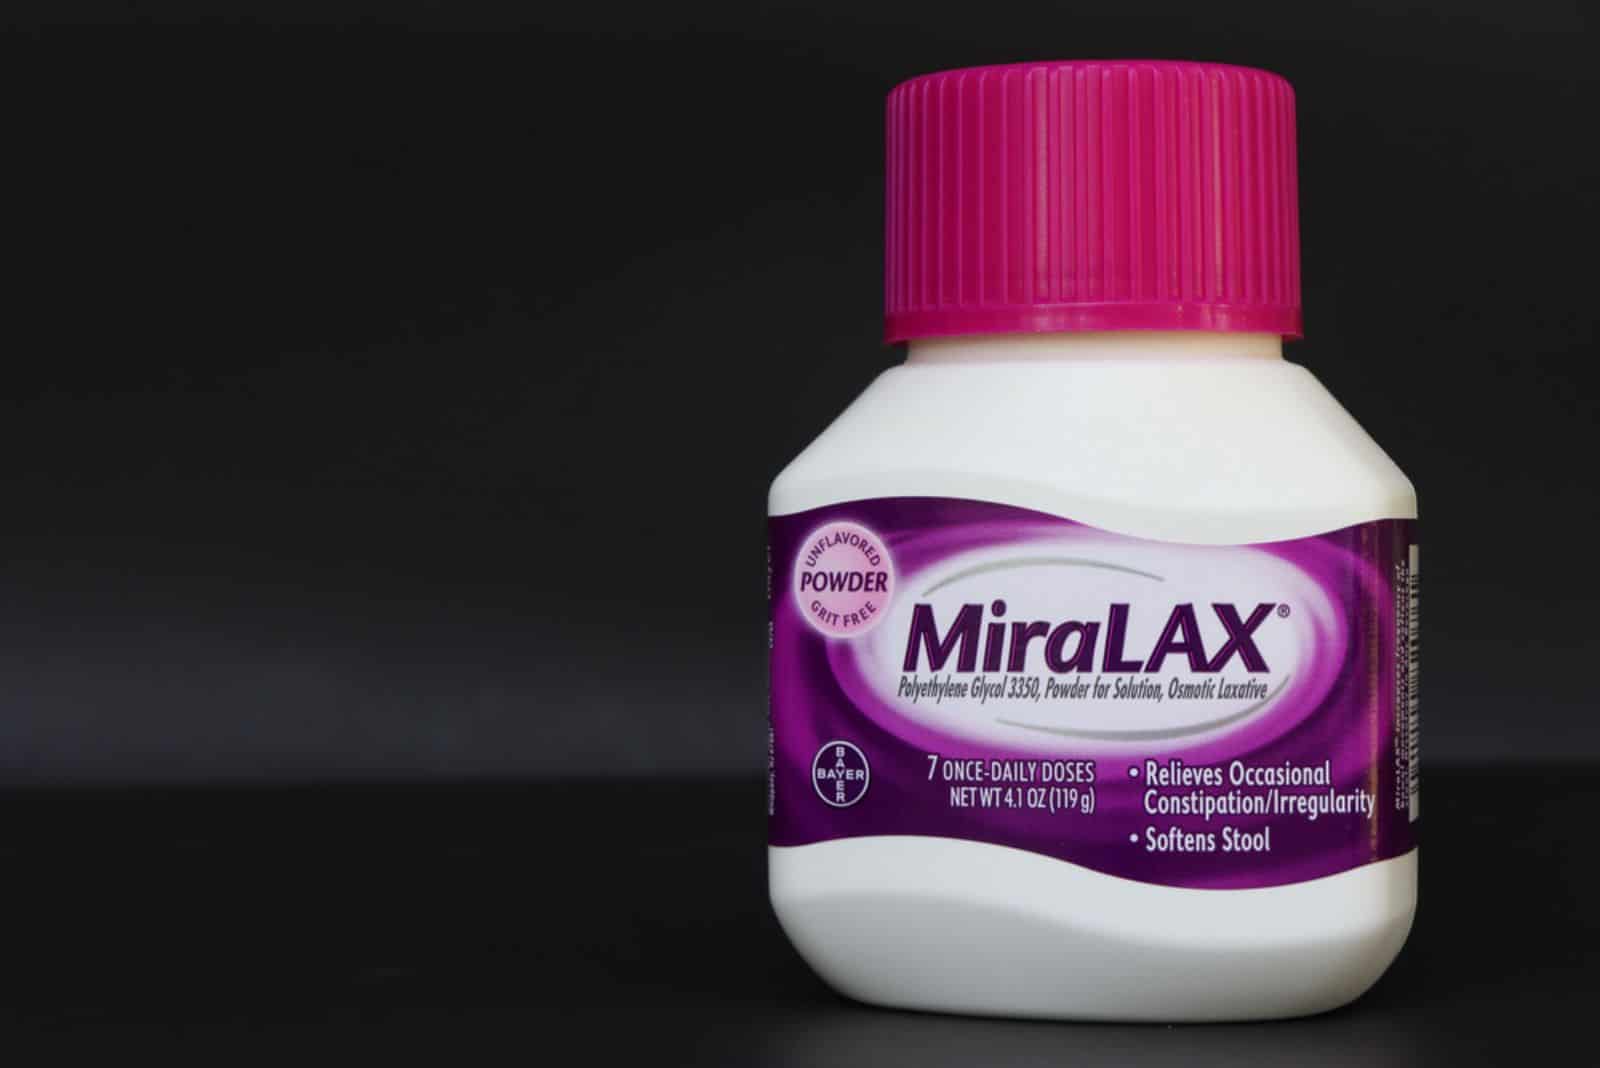  Bottle of MiraLax against black backdrop